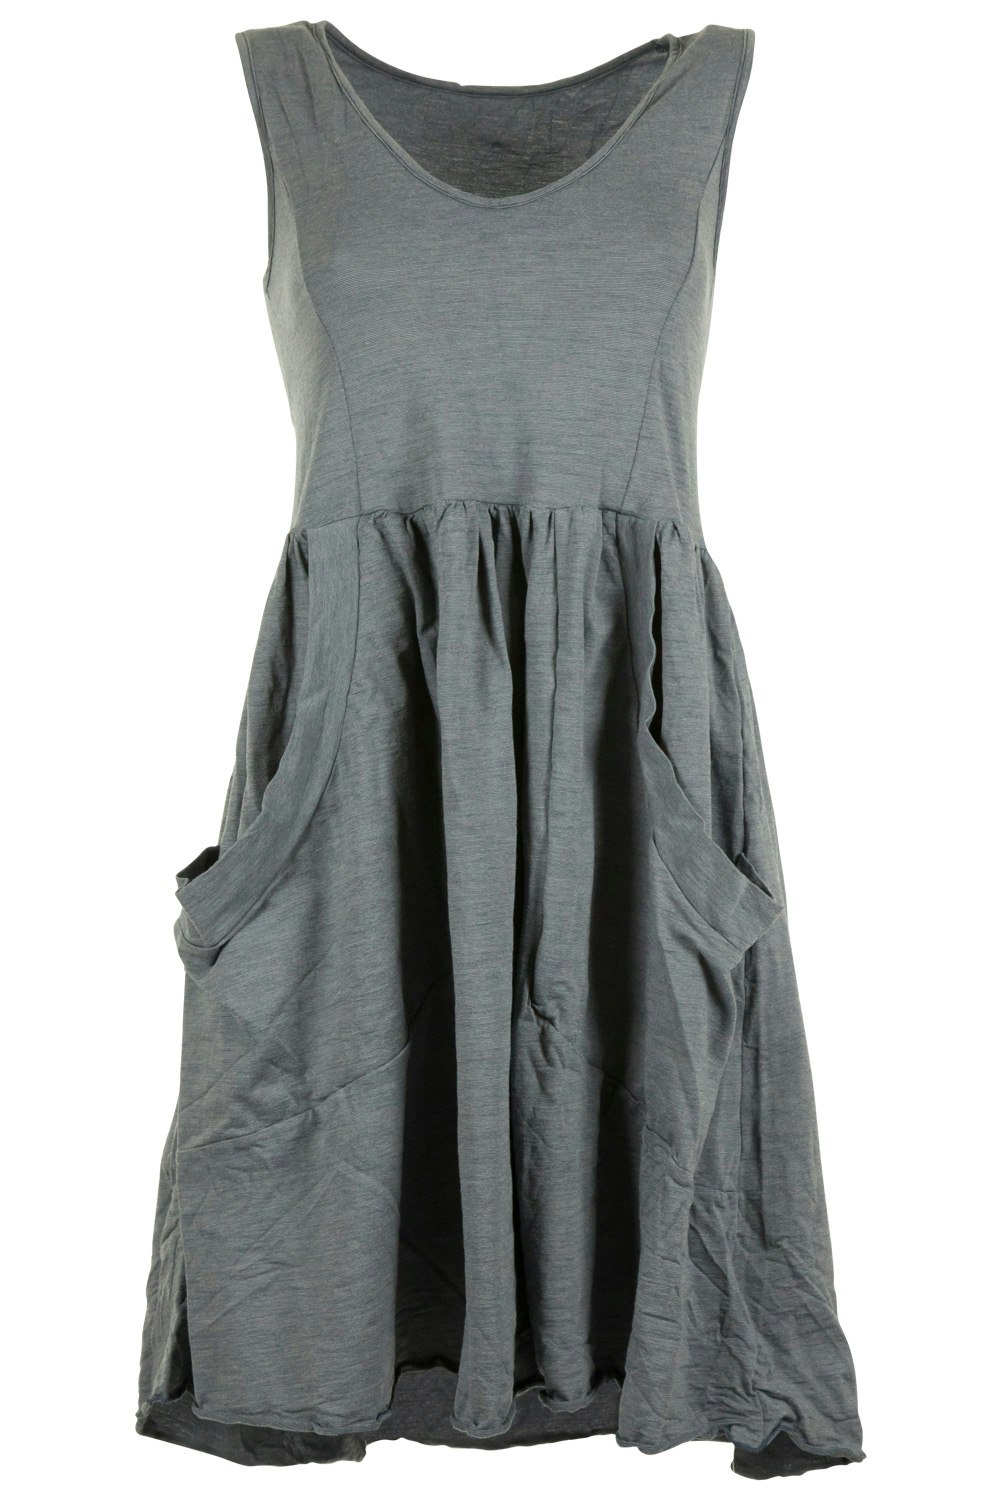 Mesop clothing online Light Wool Gather Pocket Dress - Womens Knee